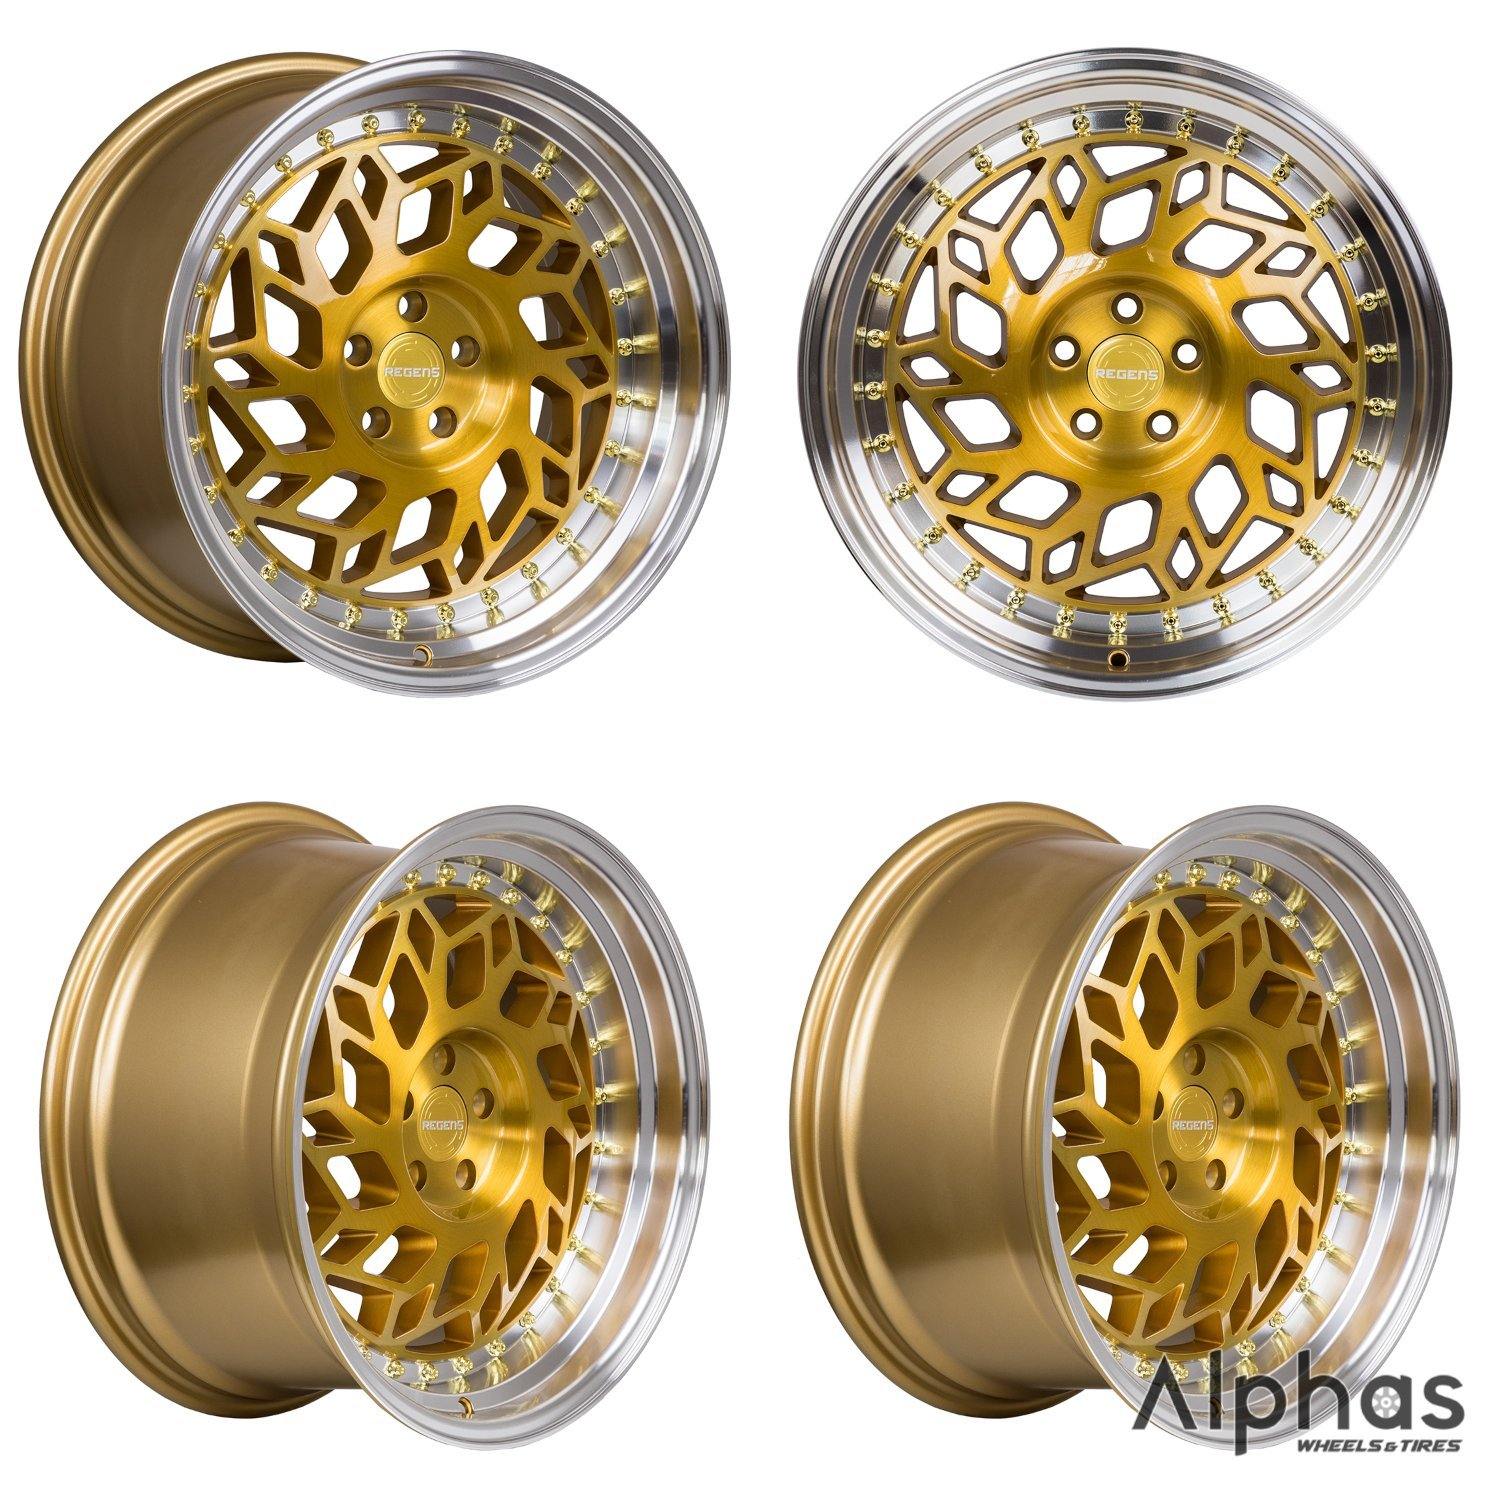 Regen5 R32 18x9.5 5x112 42ET Brushed Gold/Polish Lip (Set of 4 Wheels) - alphasone